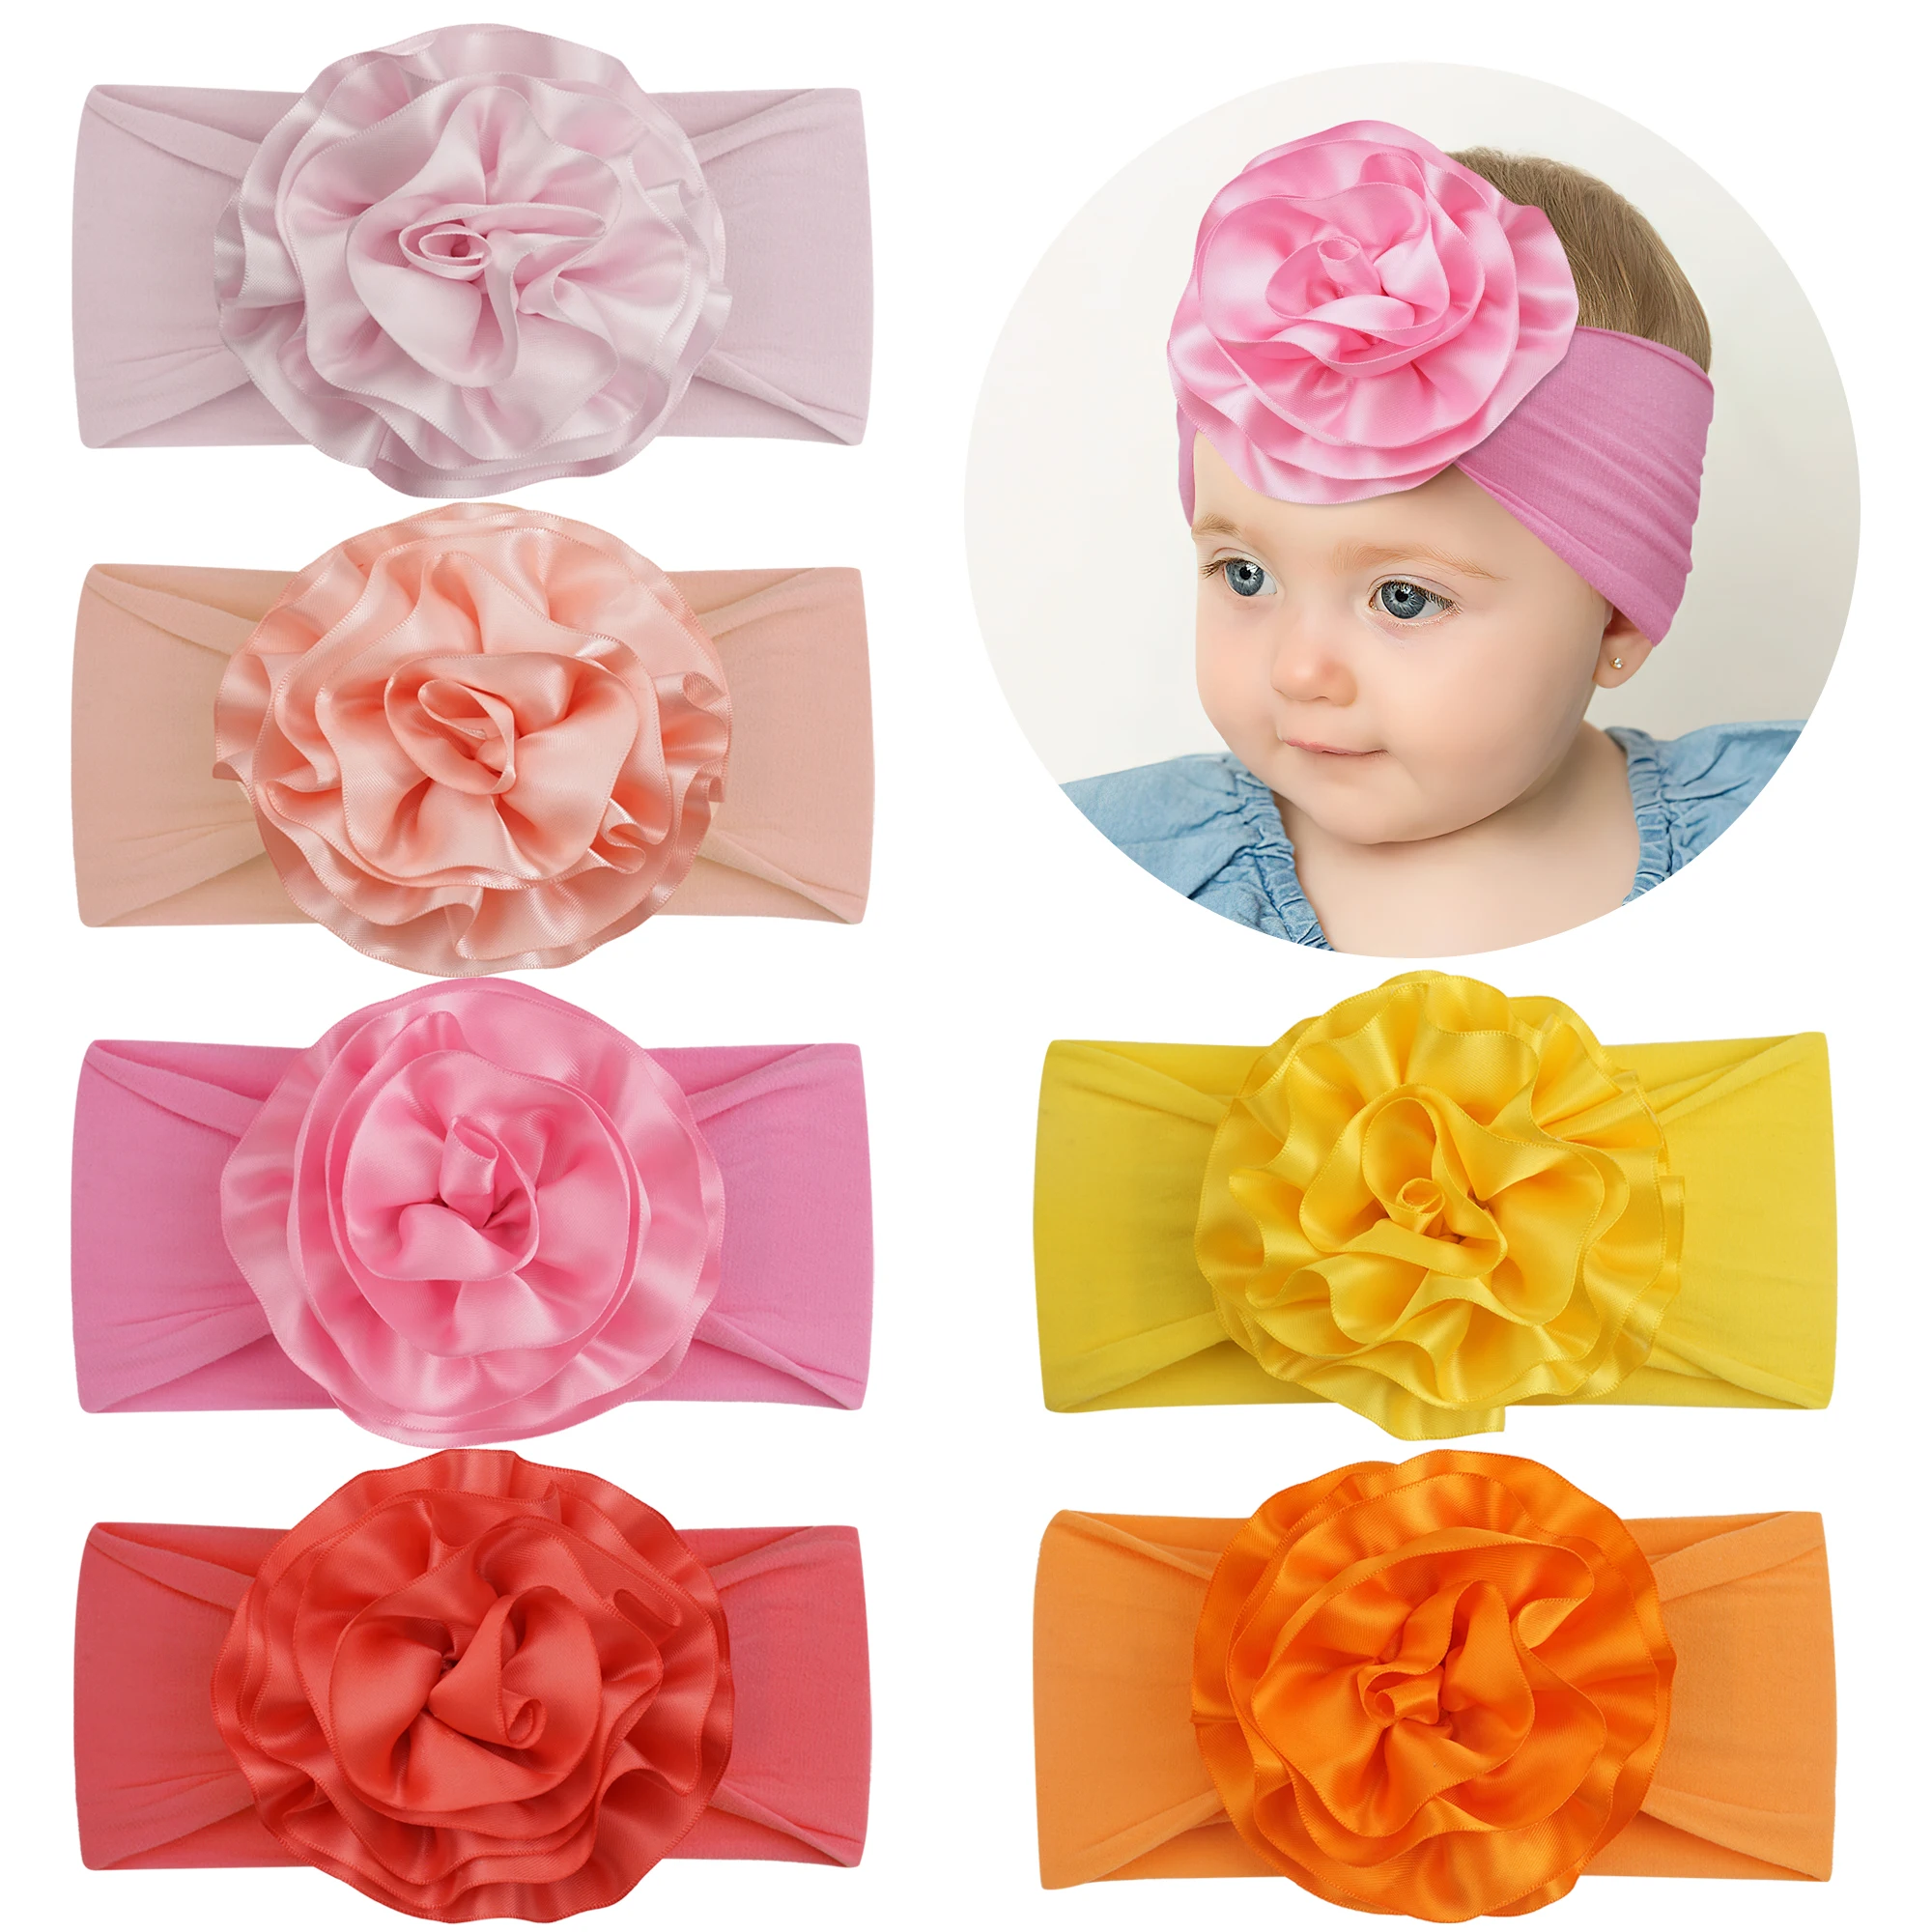 

Baby Nylon Headbands Hairbands Hair Wraps Big Satin Flower Elastics for Baby Girls Newborn Infant Toddlers Kids